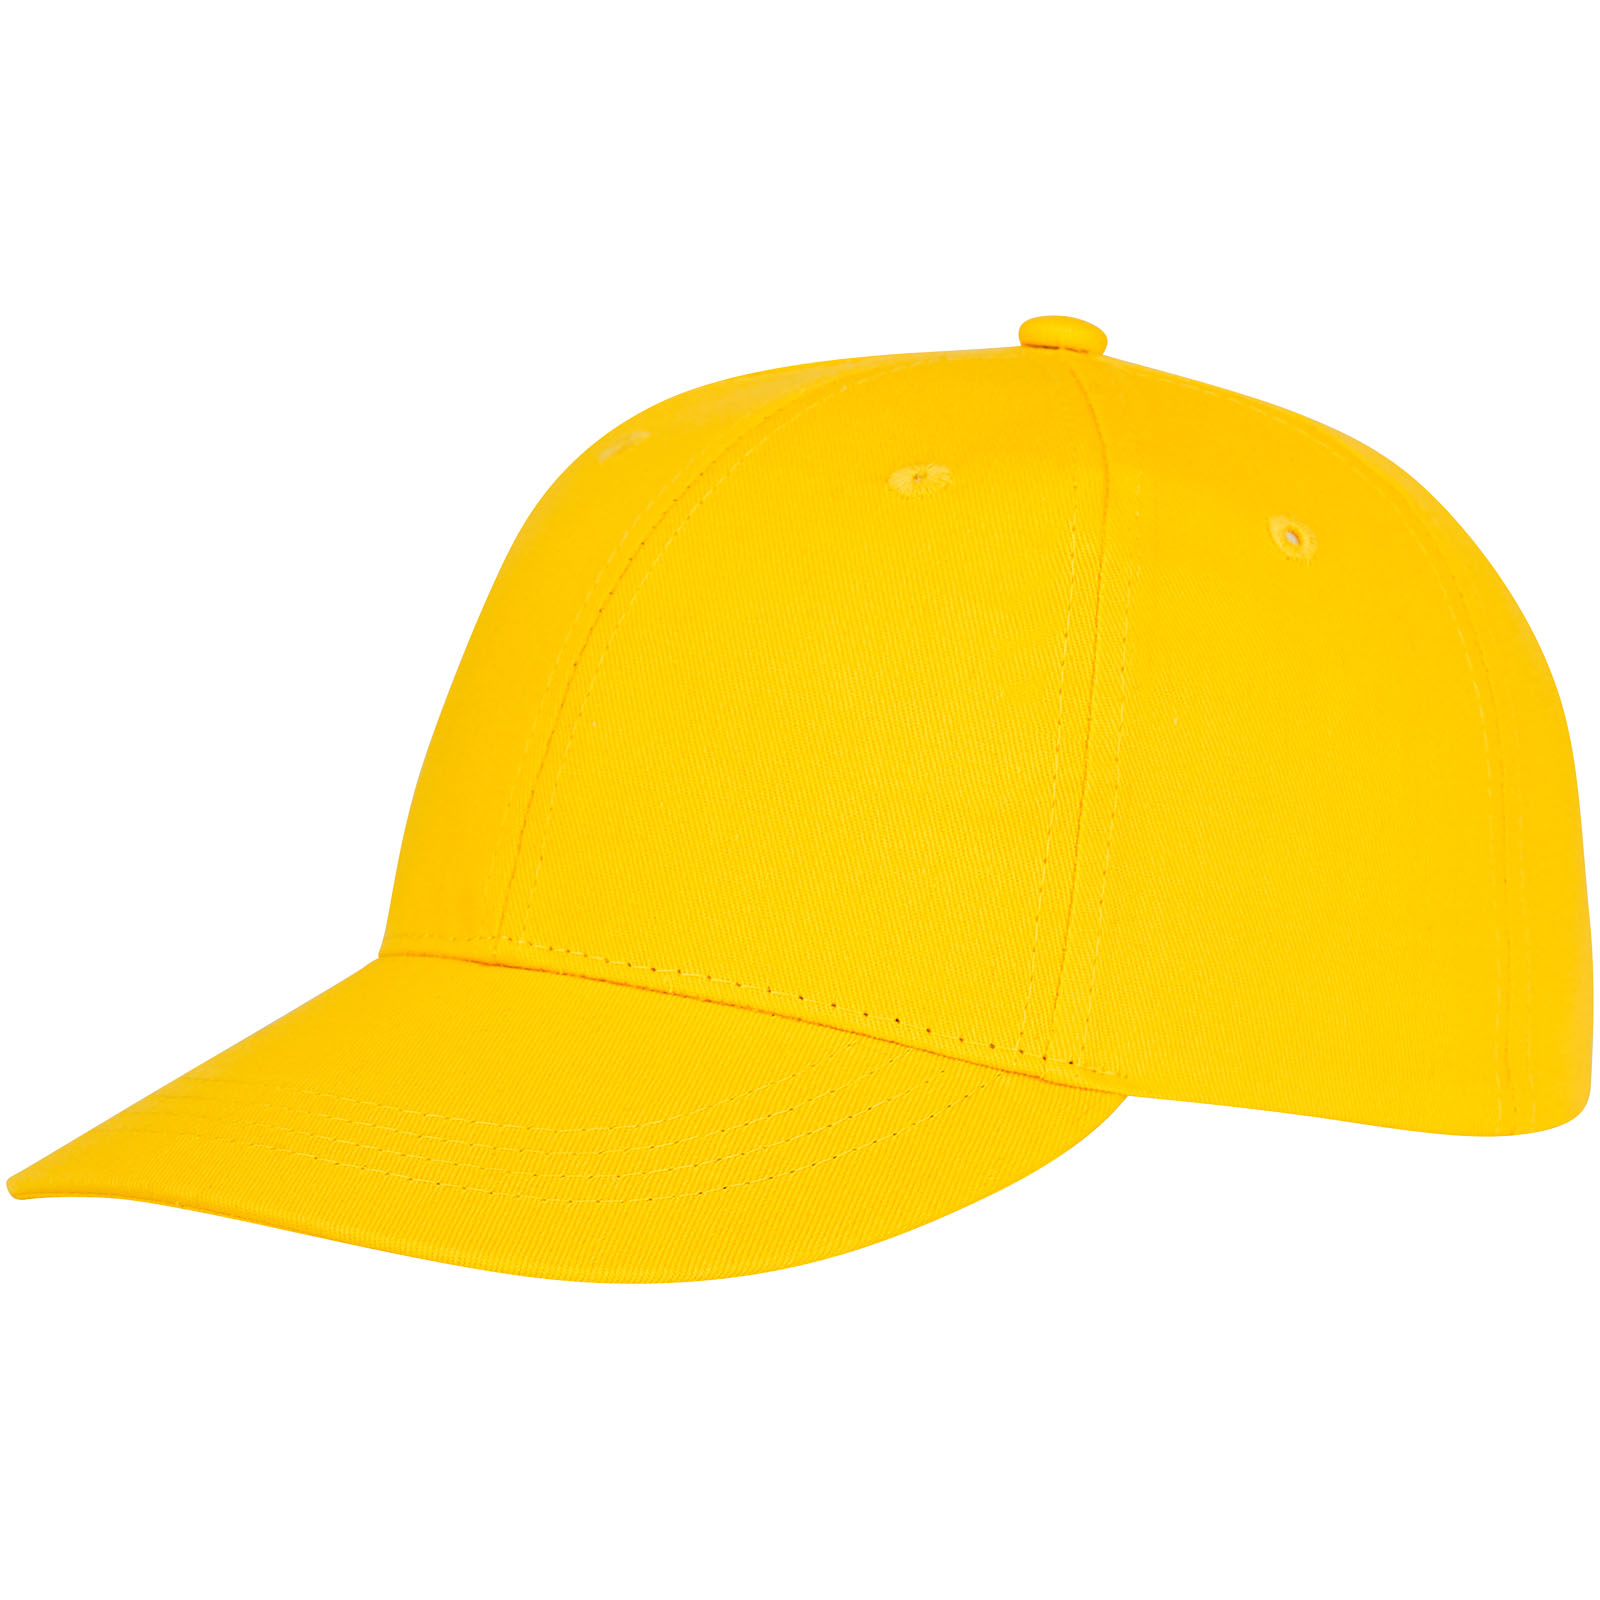 Caps & Hats - Ares 6 panel cap